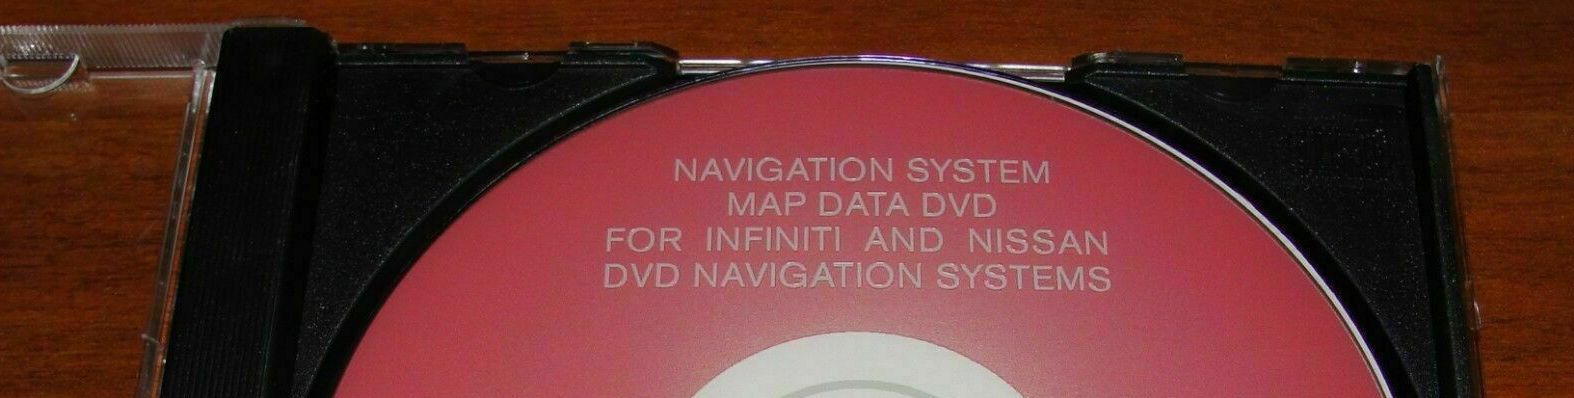 Dvd Navigation Map North America Toyota Download.